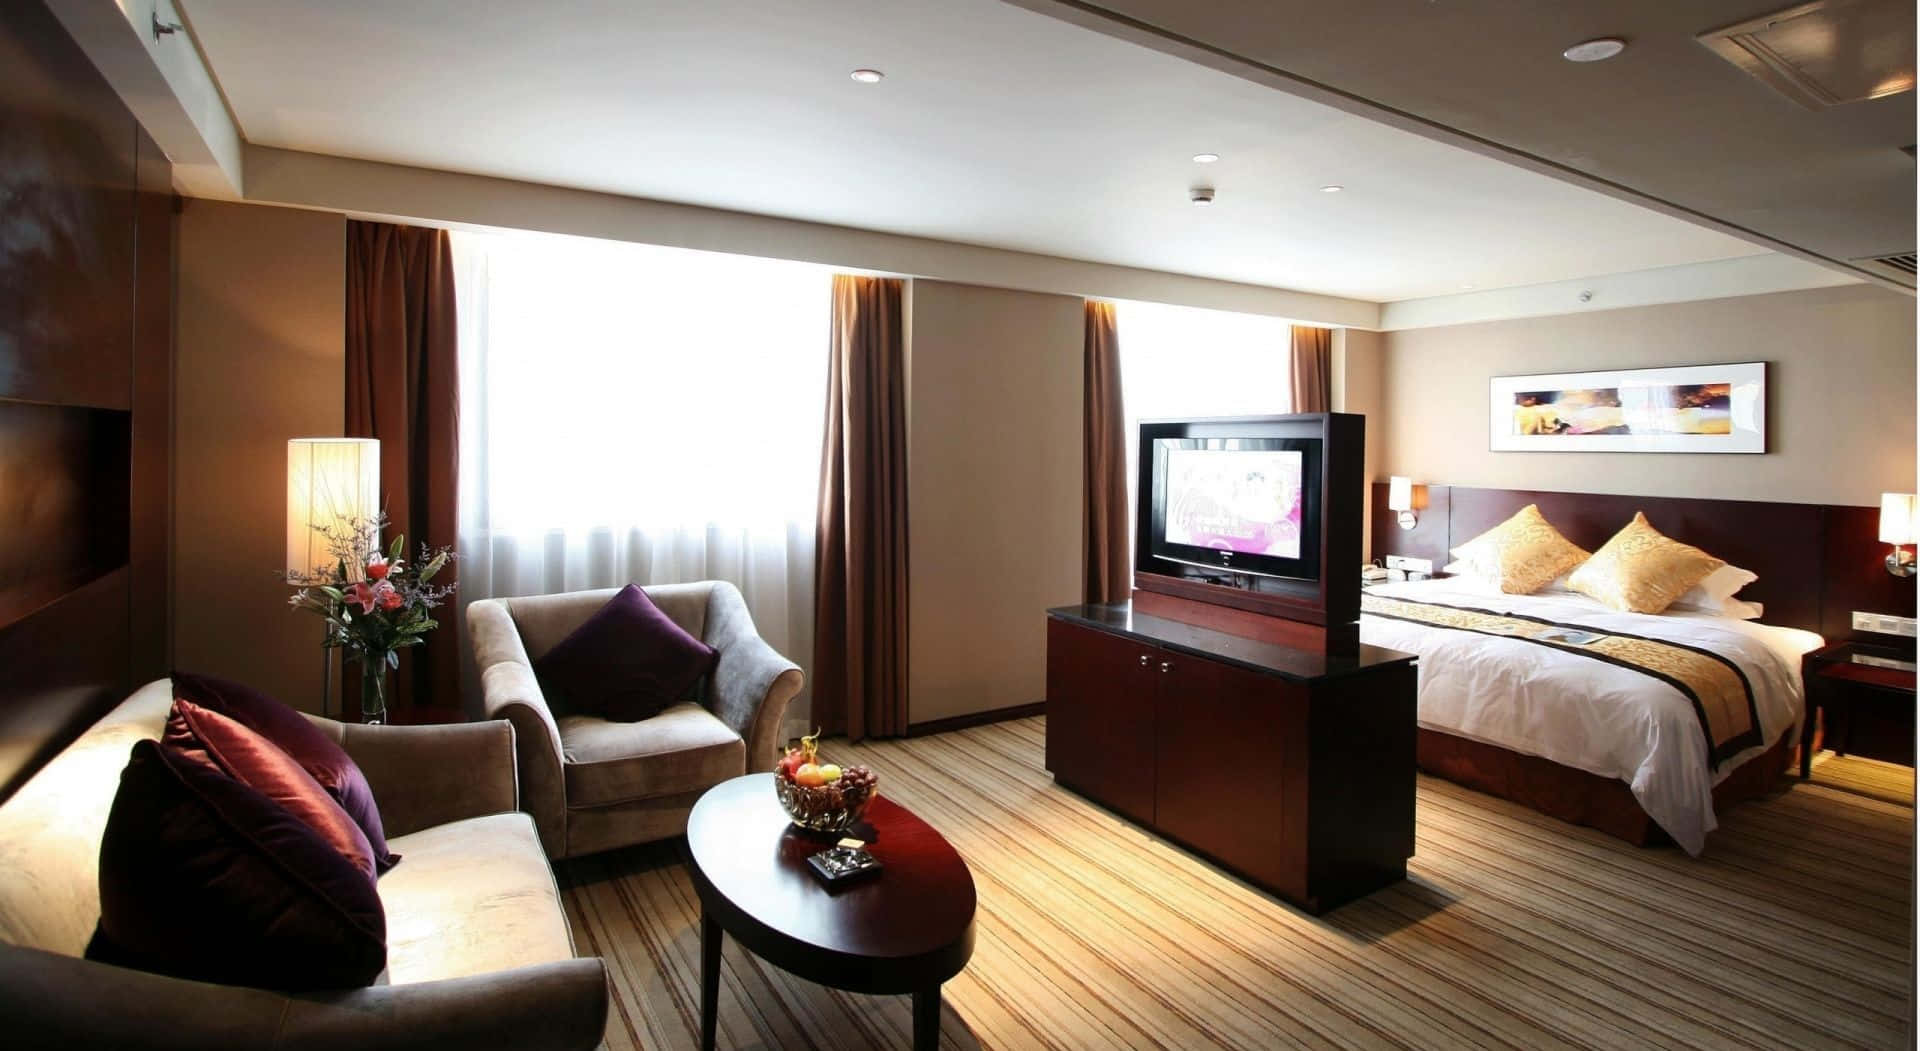 Elegant Hotel Room with Modern Decor